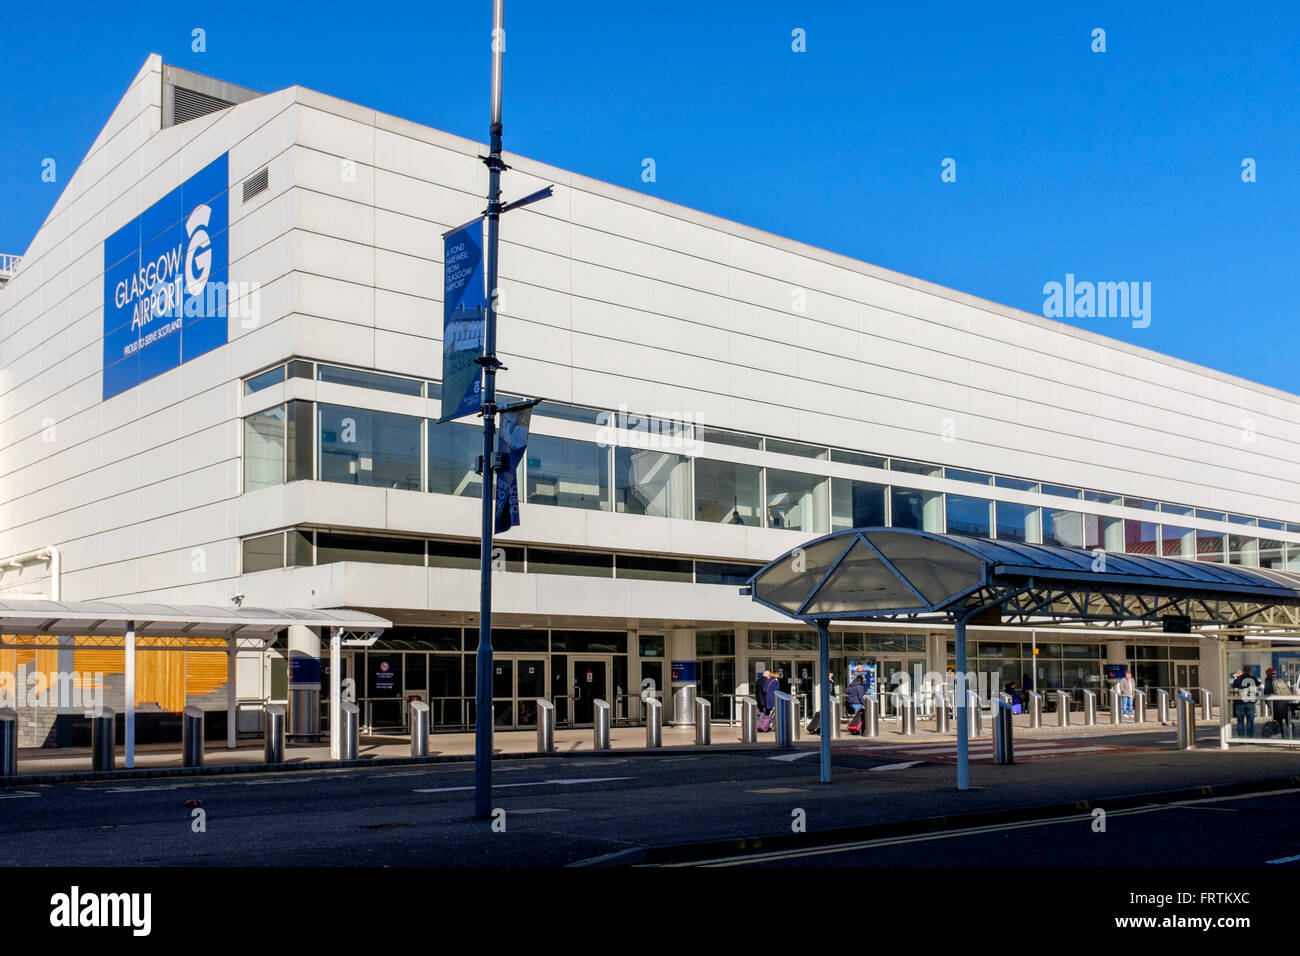 Terminal building of Glasgow Airport, Scotland, UK Stock Photo